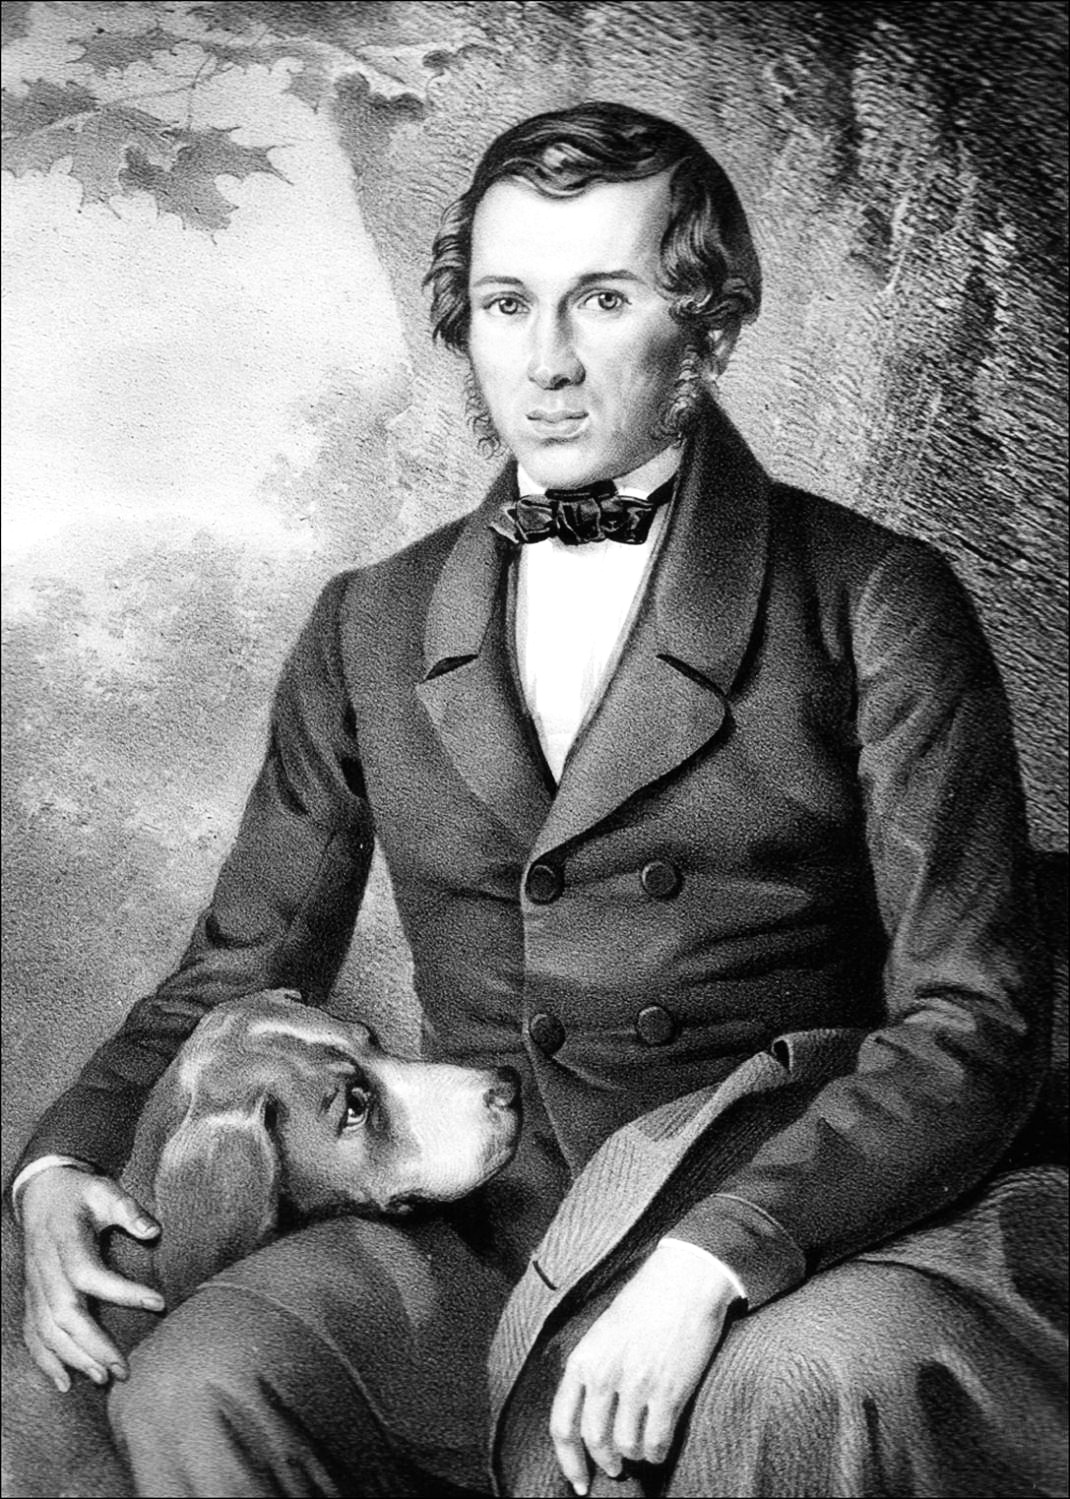 Євген Гребінка, гравюра Аполона Мокрицького, 1840 р. А